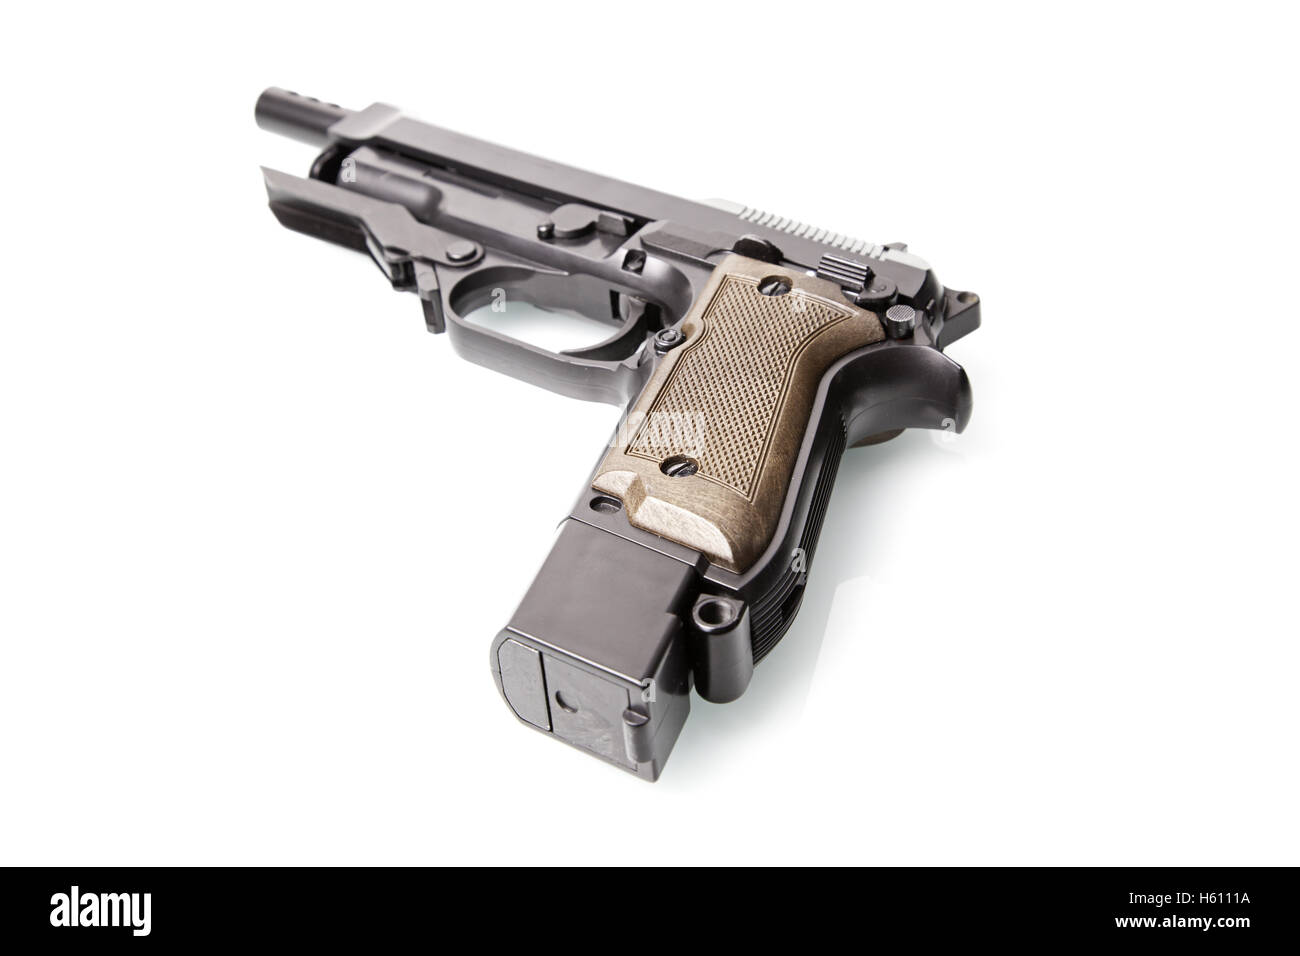 Handgun, gun detail, protection and violence, pistol Stock Photo